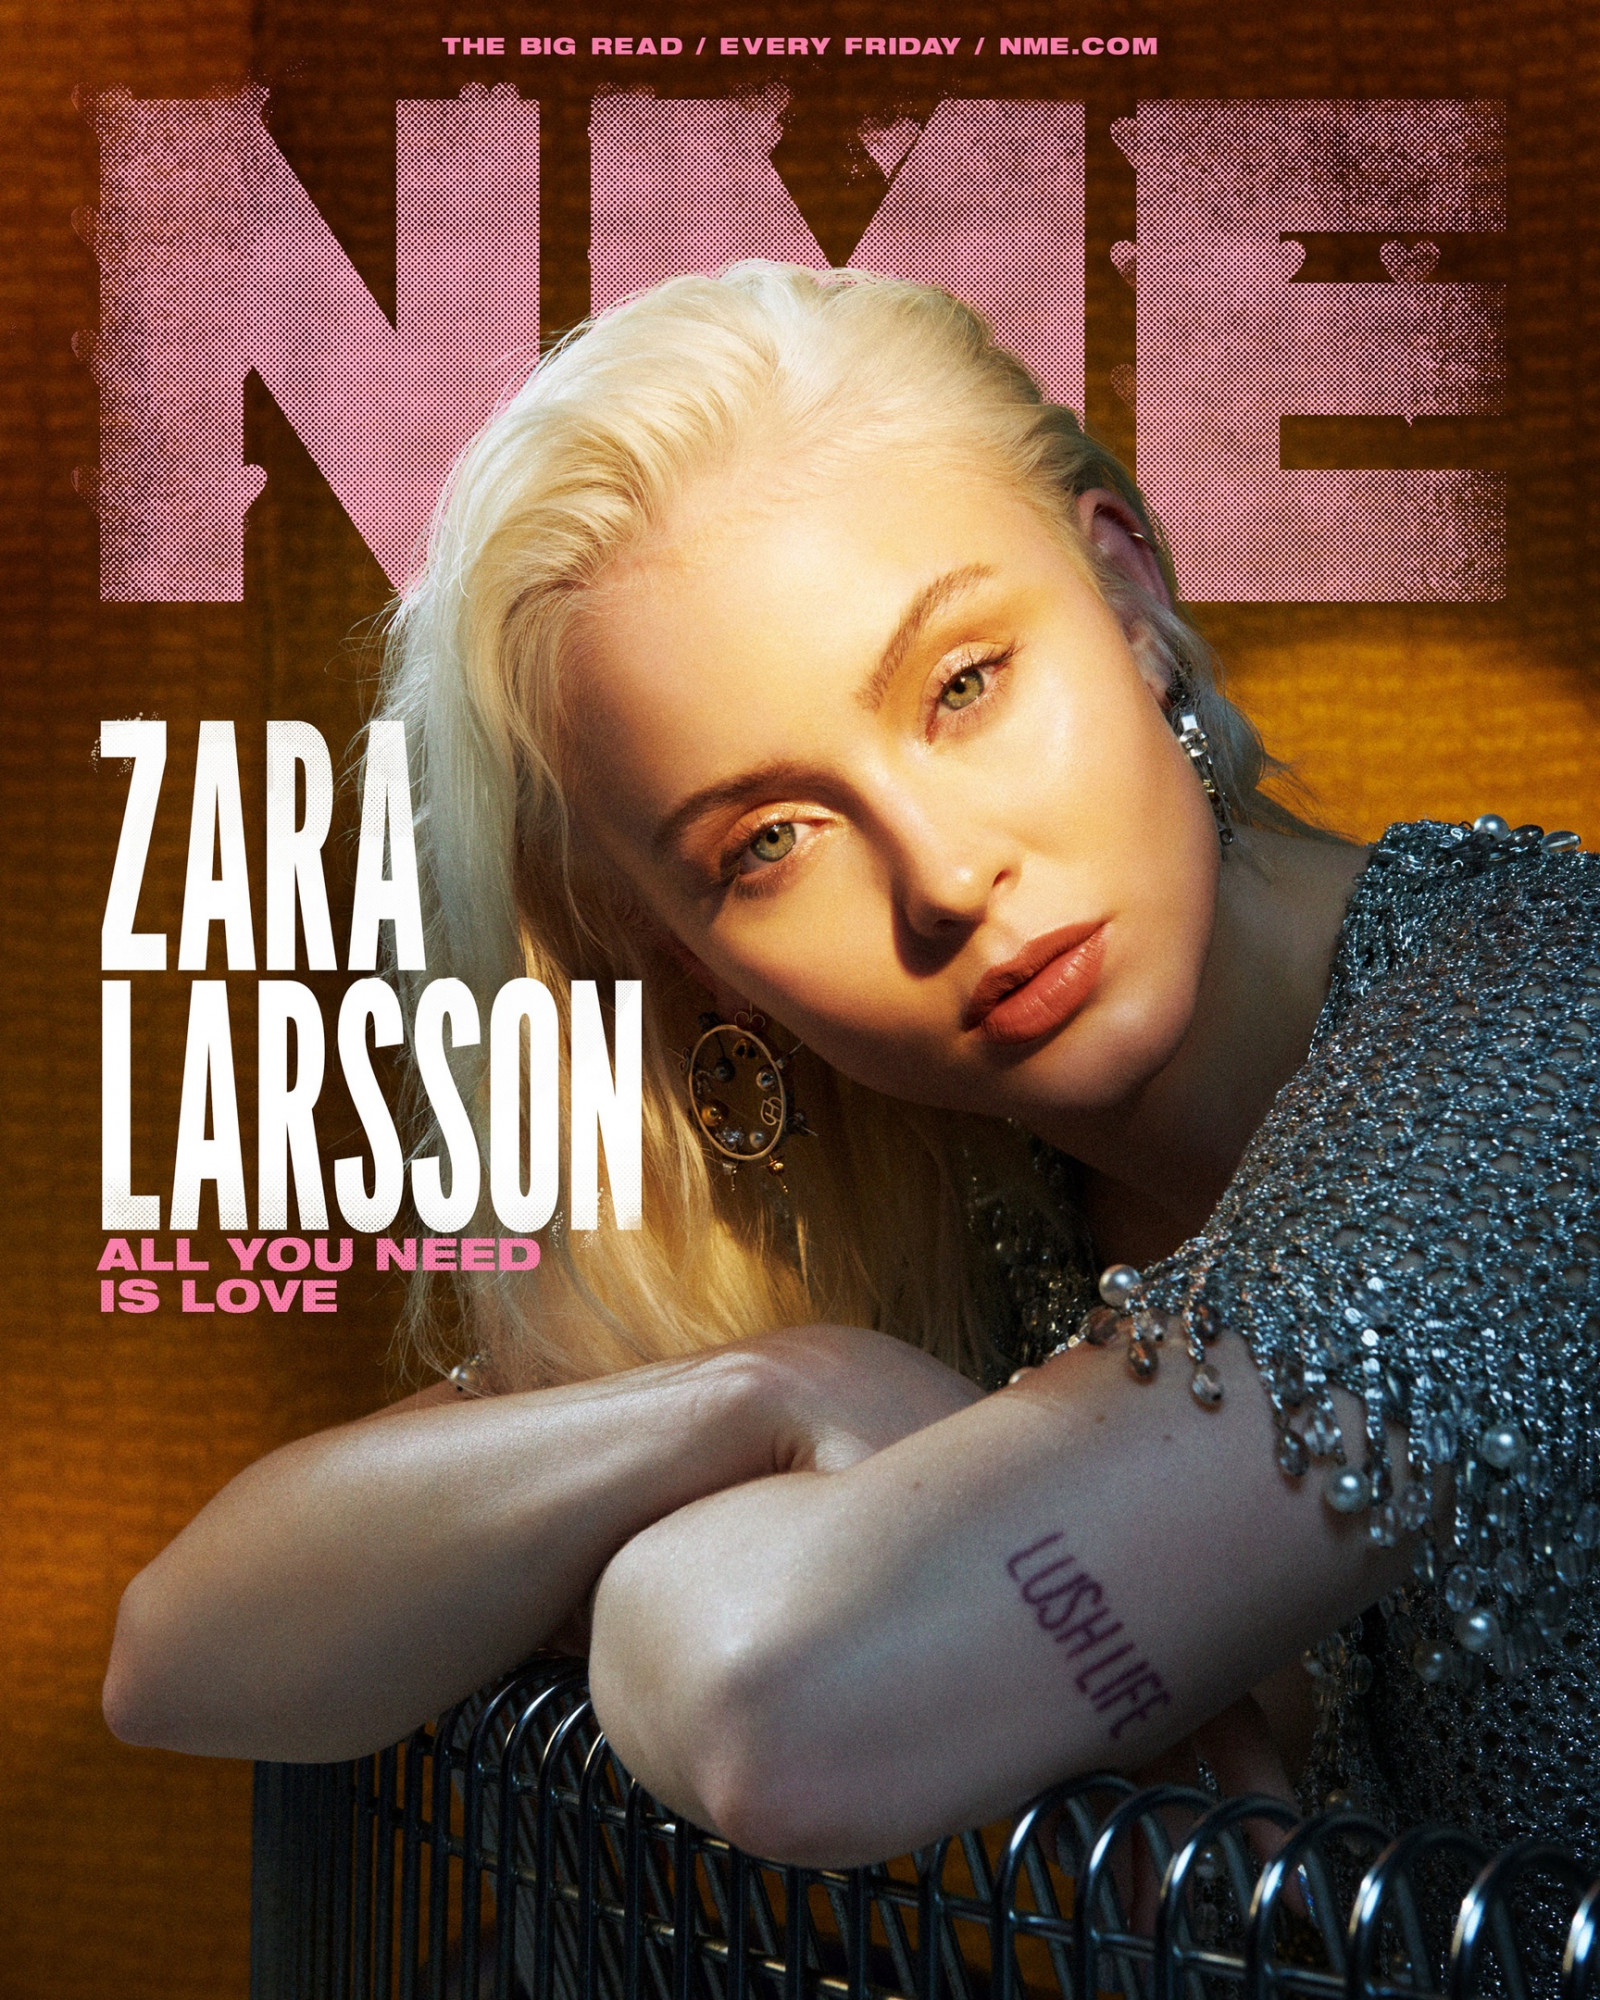 Зара Ларссон (Zara Larsson)